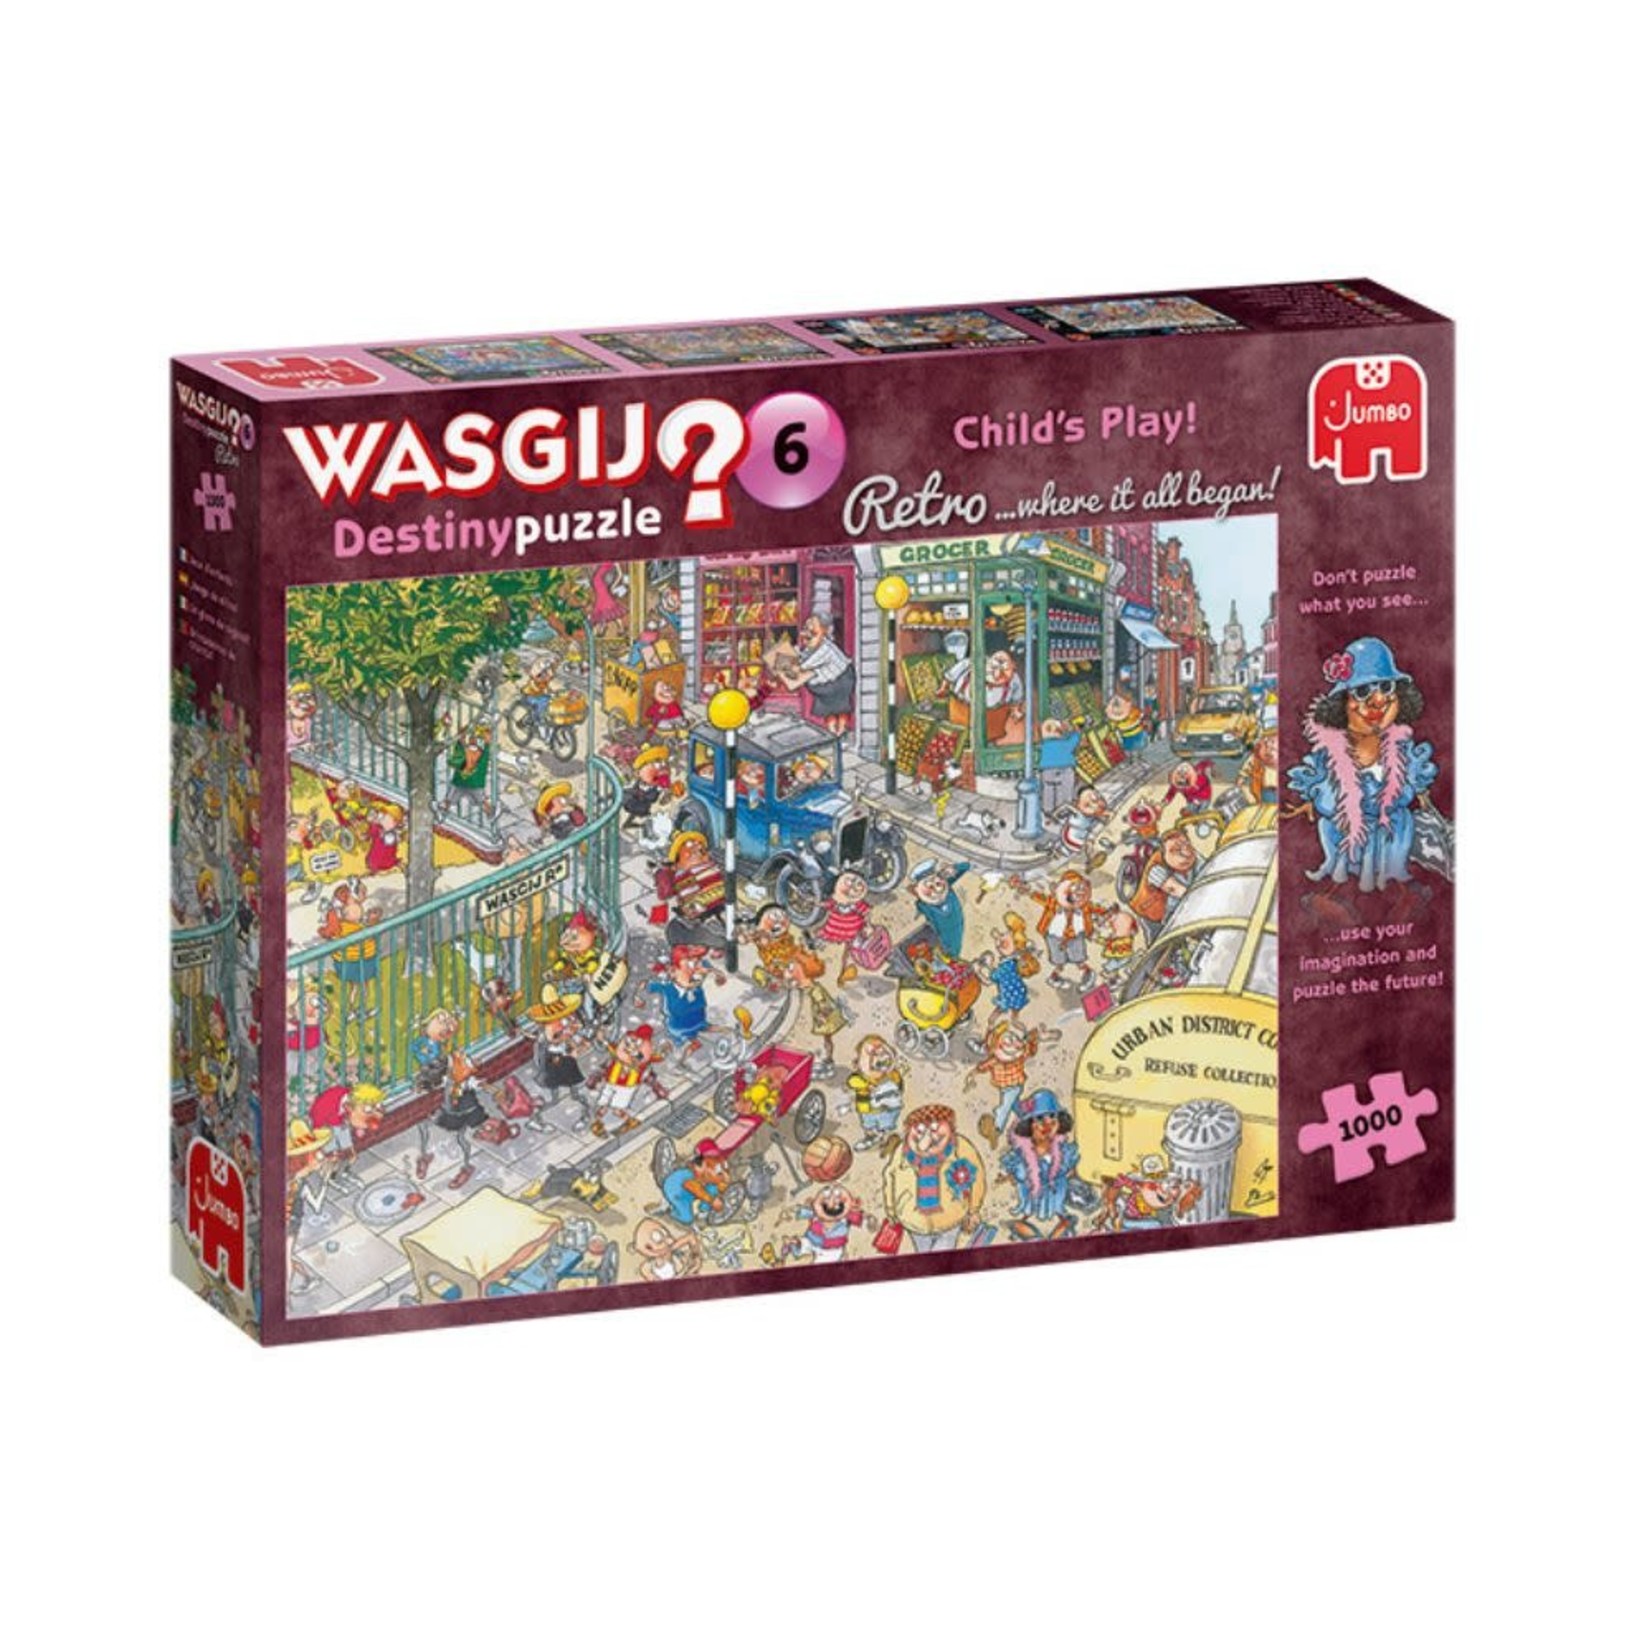 Jumbo Puzzle 1000: Wasgij Destiny Retro #6, Jeux d'enfants!